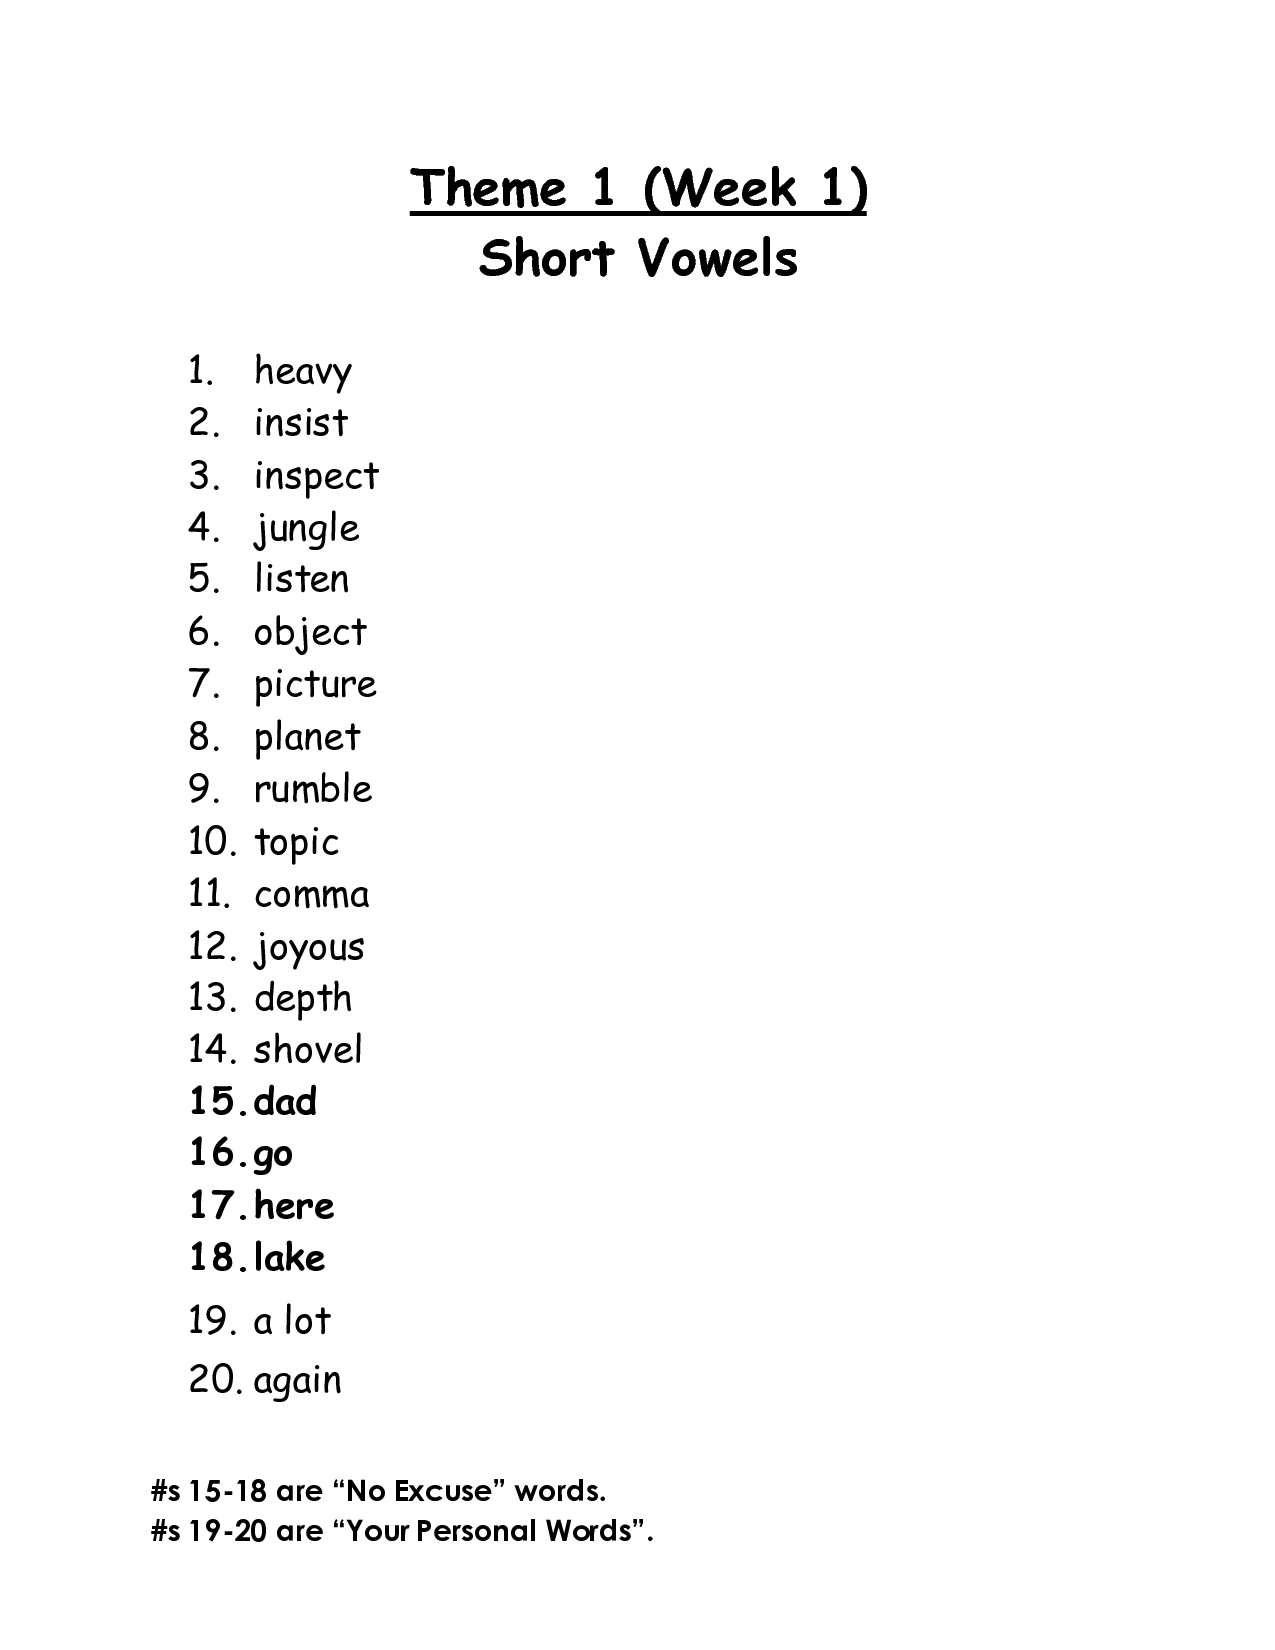 3rd Grade Spelling Words Worksheets Image